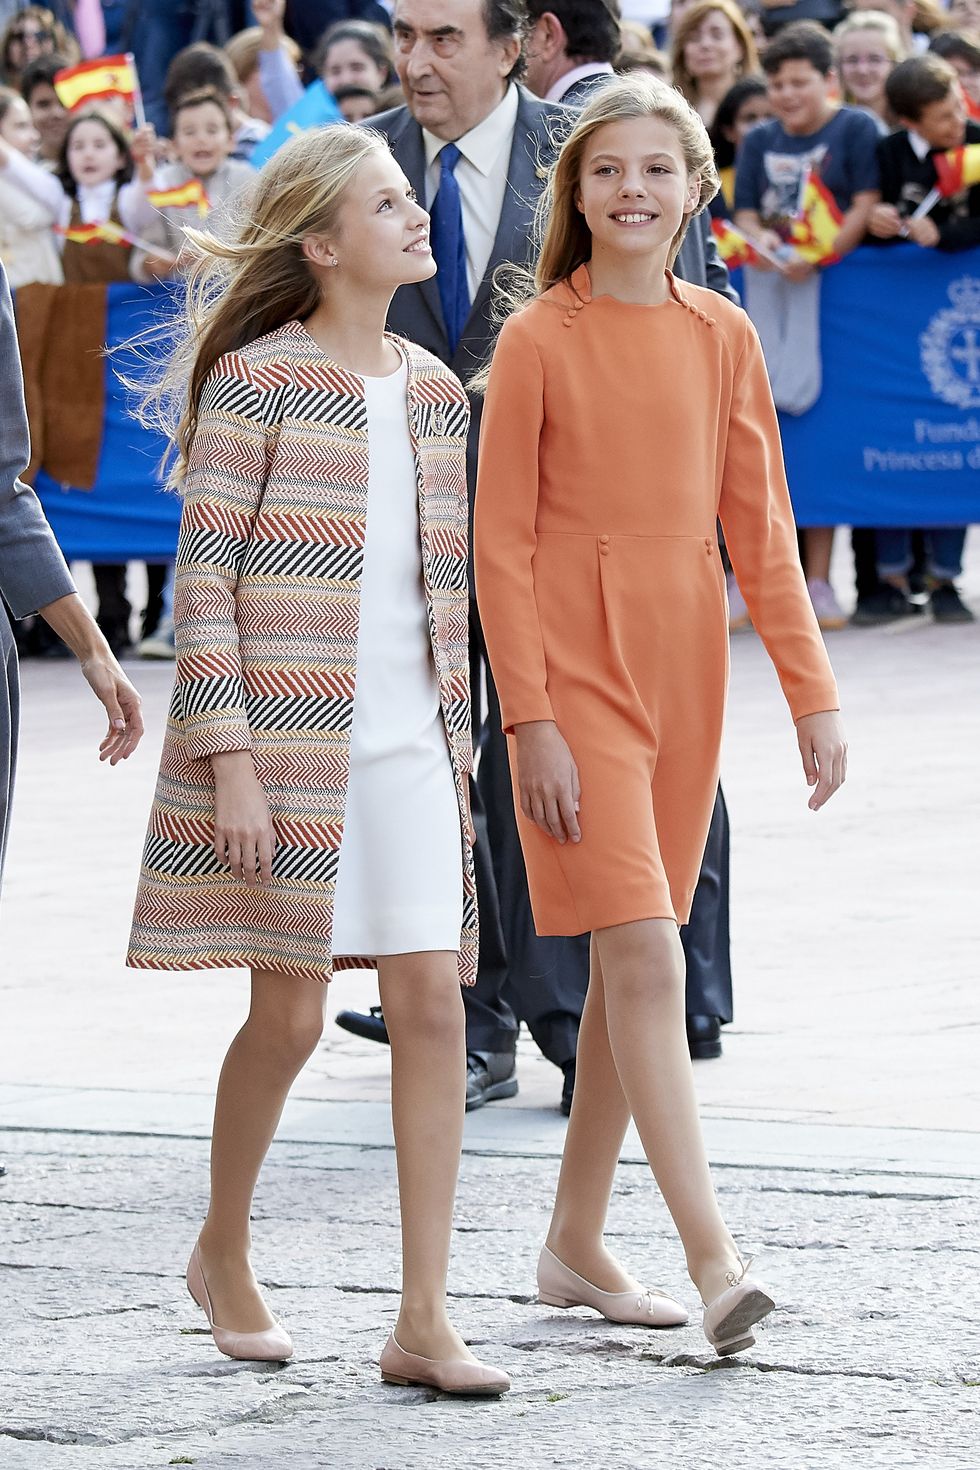 spanish royals arrive at oviedo ahead of 'princesa de asturias' awards 2019